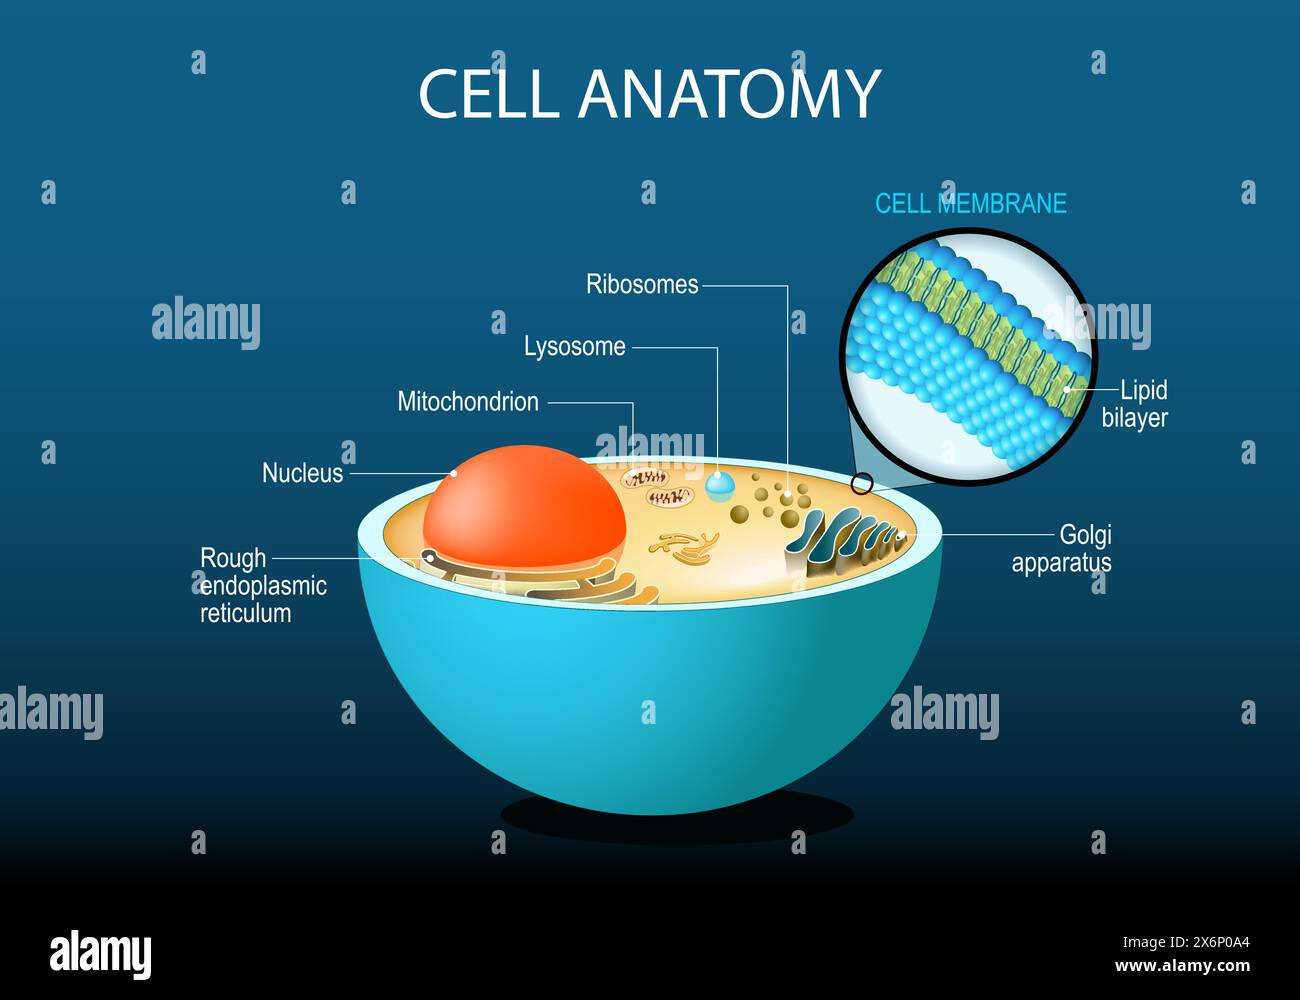 Zellanatomie. Zellstruktur und Organellen Nucleus, Ribosomen, endoplasmatisches Retikulum, Golgi-Apparat, Mitochondrion, Zytoplasma, Lysosom. Nahaufnahme o Stock Vektor